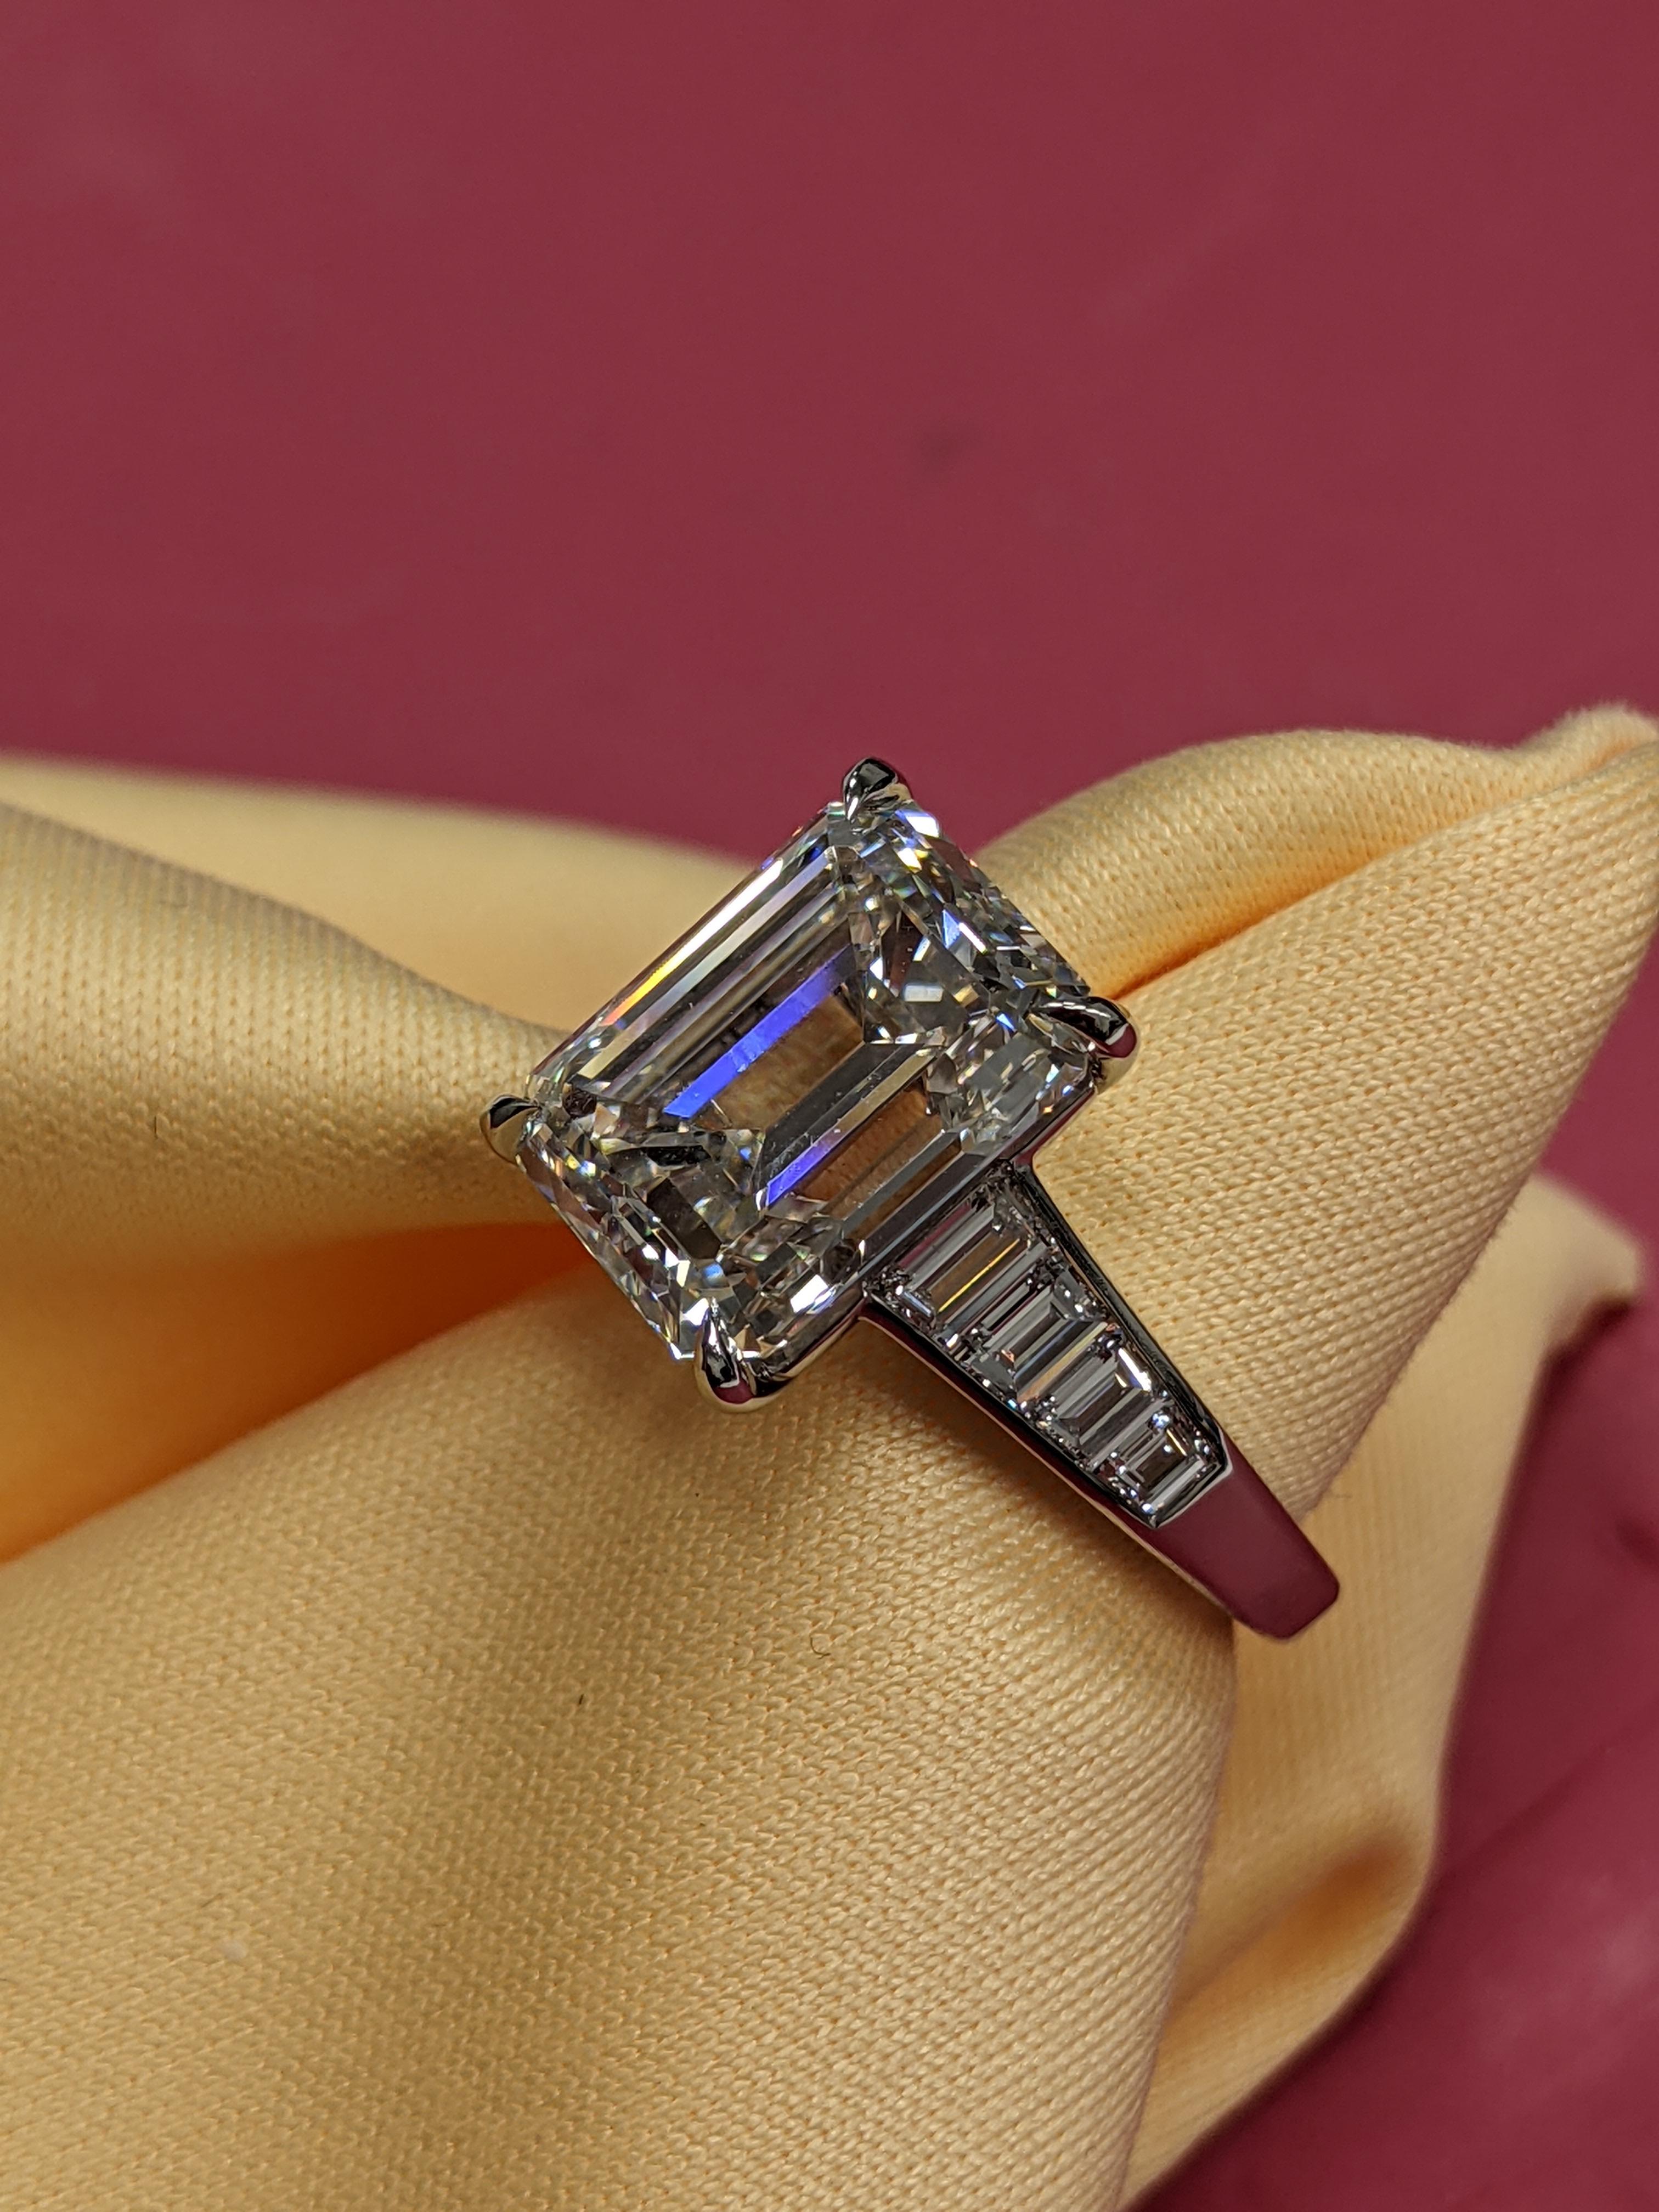 Women's 5 Ct. H VVS2 Emerald Cut GIA Certified Diamond Ring in Platinum